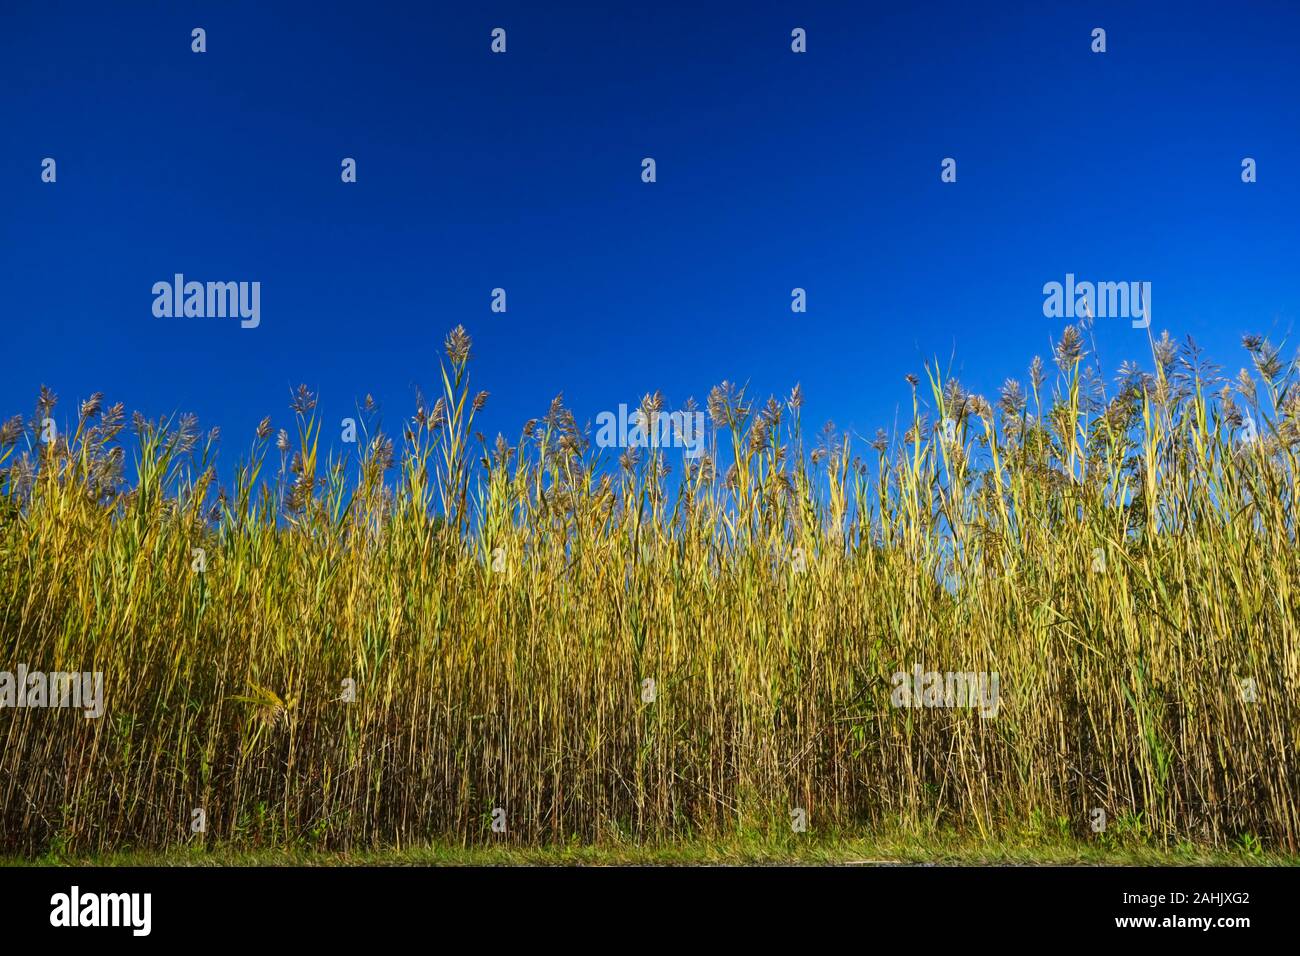 Wild herbs in a field against a deep blue sky. Stock Photo